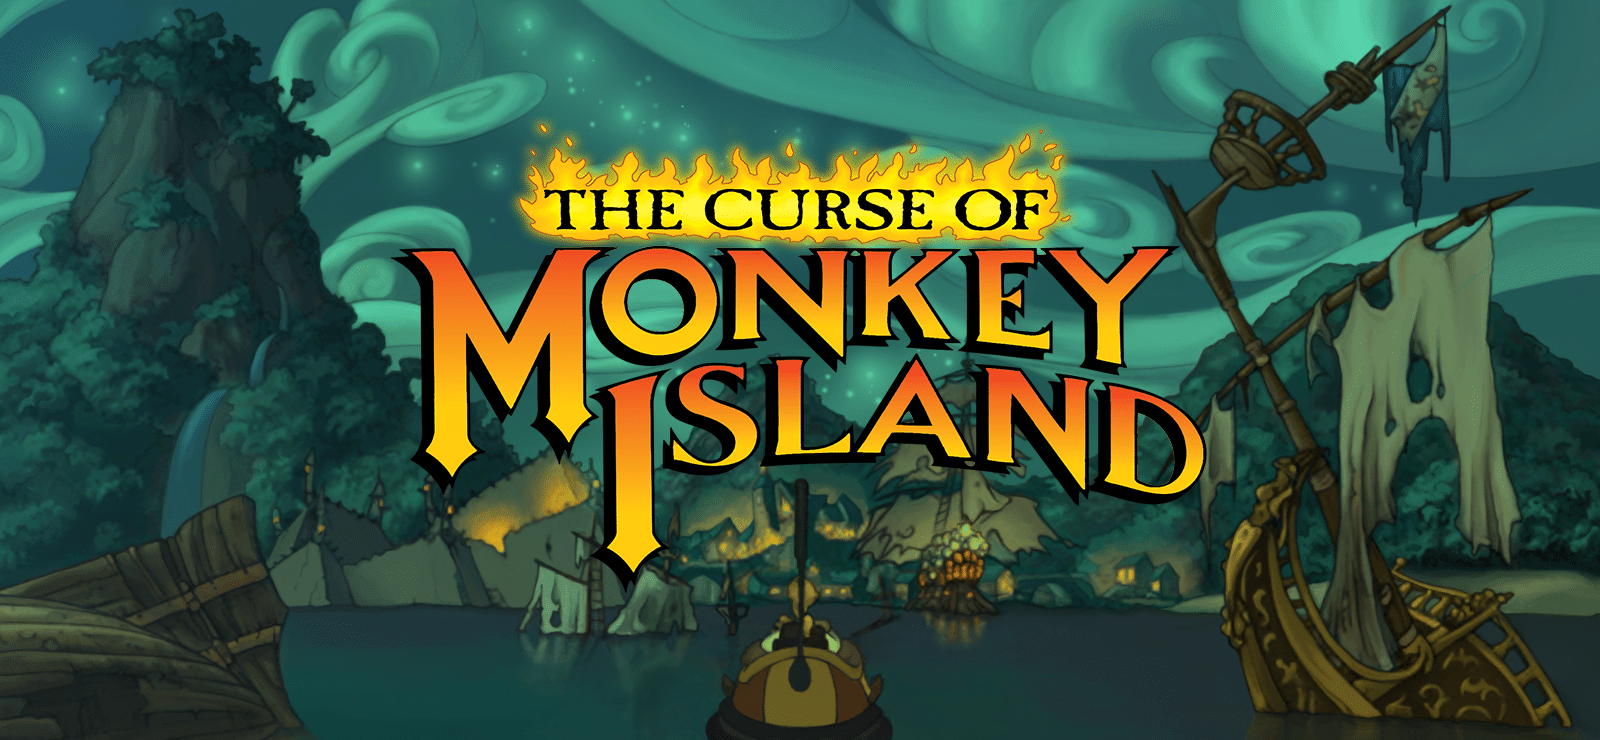 The curse of Monkey Island